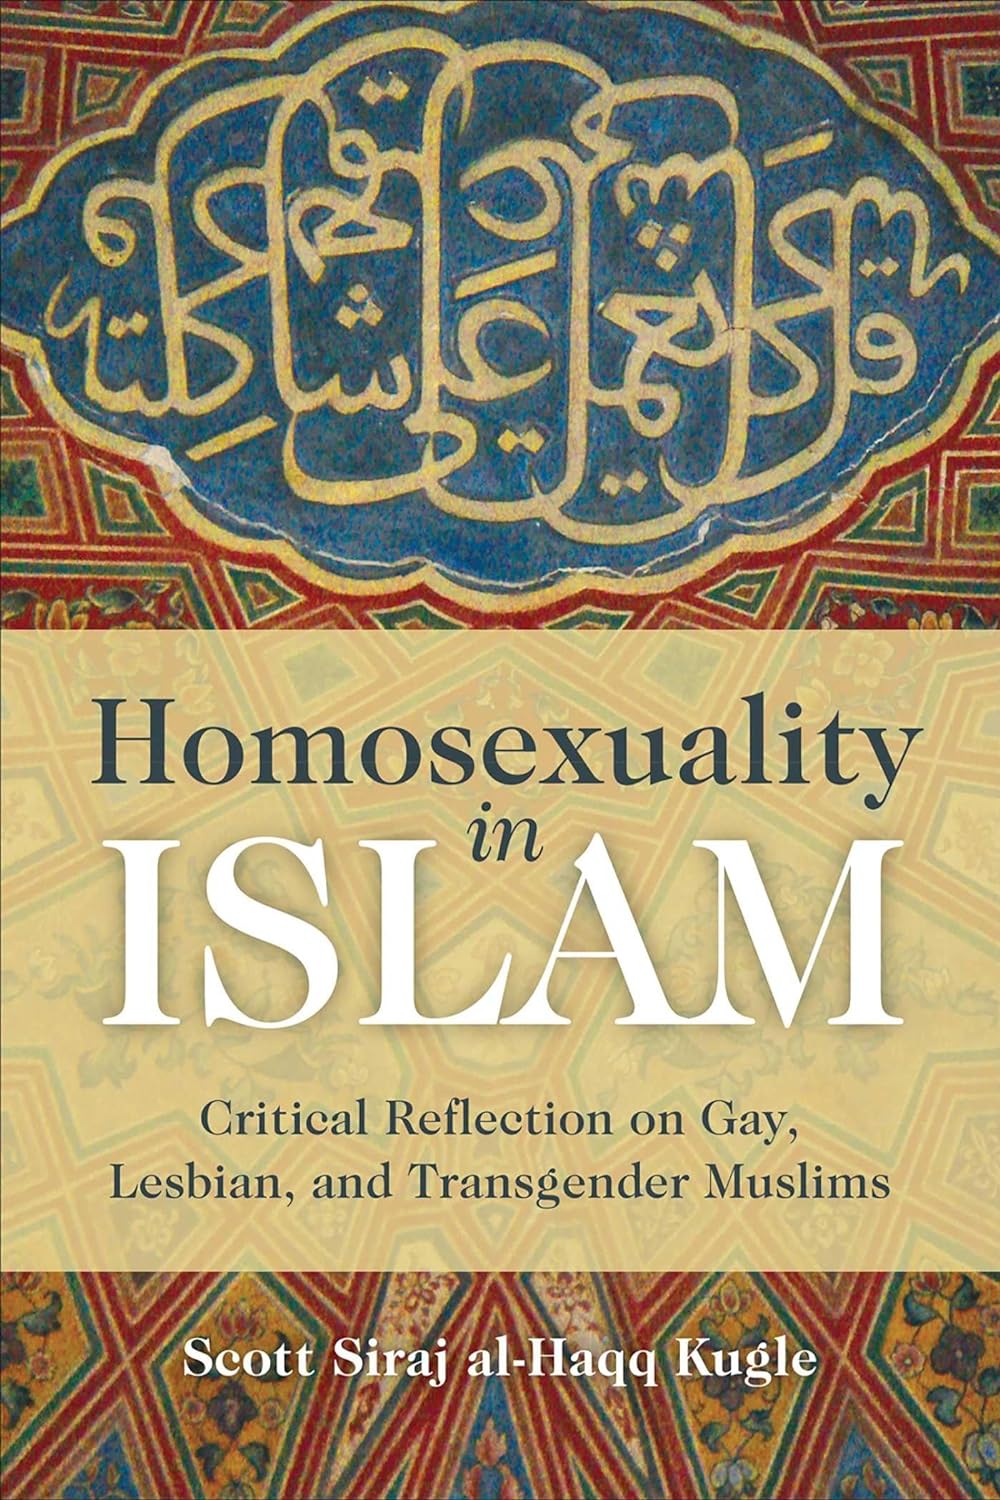 Homosexuality In Islam by Scott Siraj al-Haqq Kugle